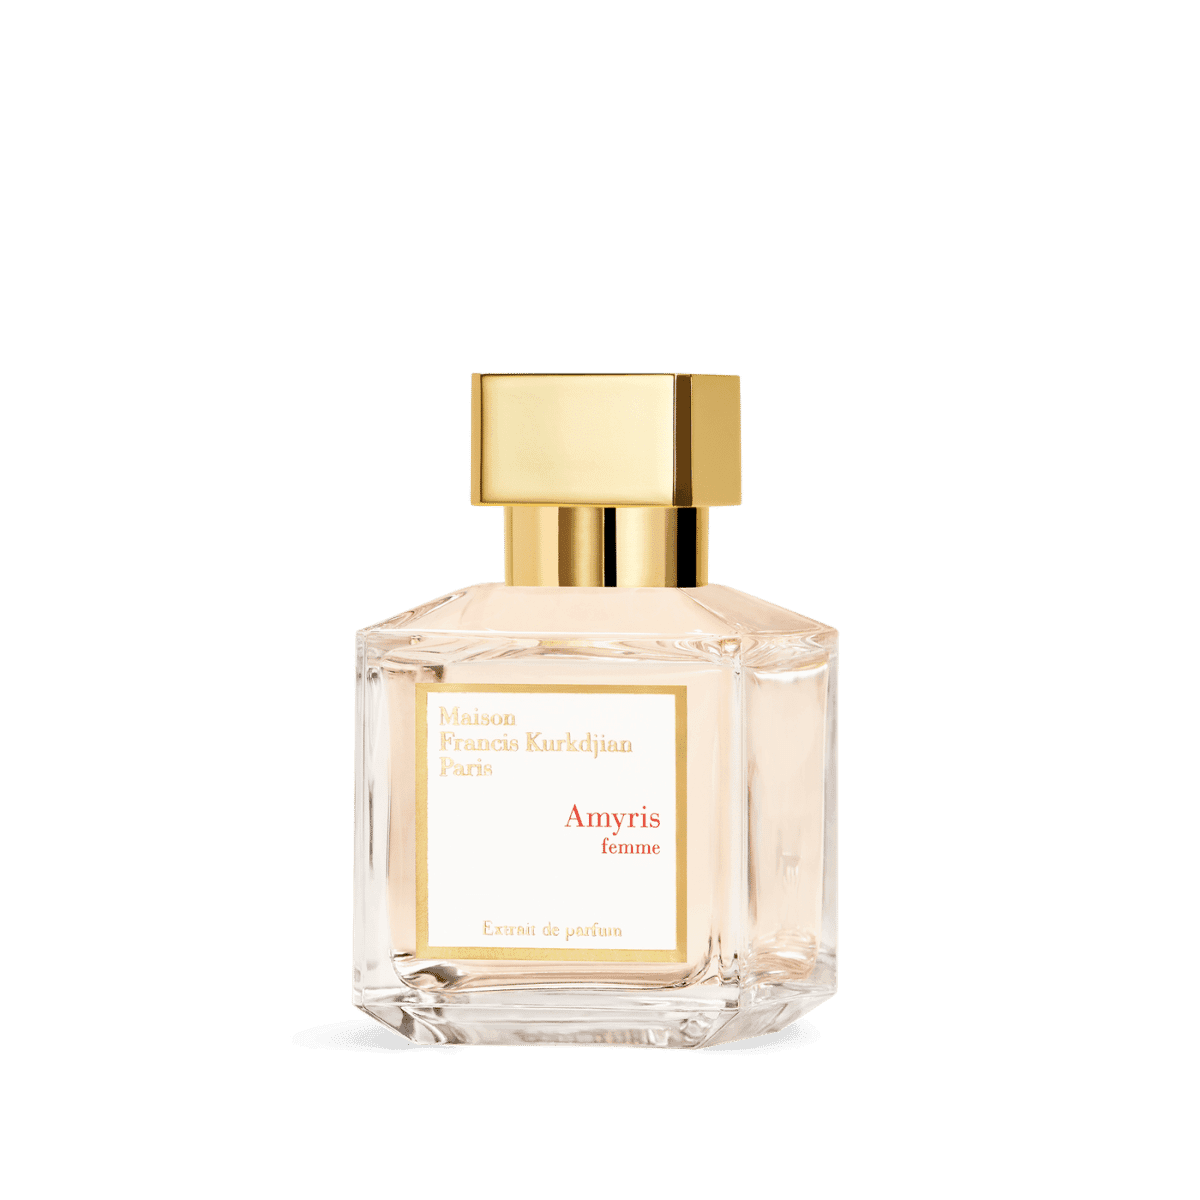 Maison Francis Kurkdjian - Amyris femme extrait de parfum